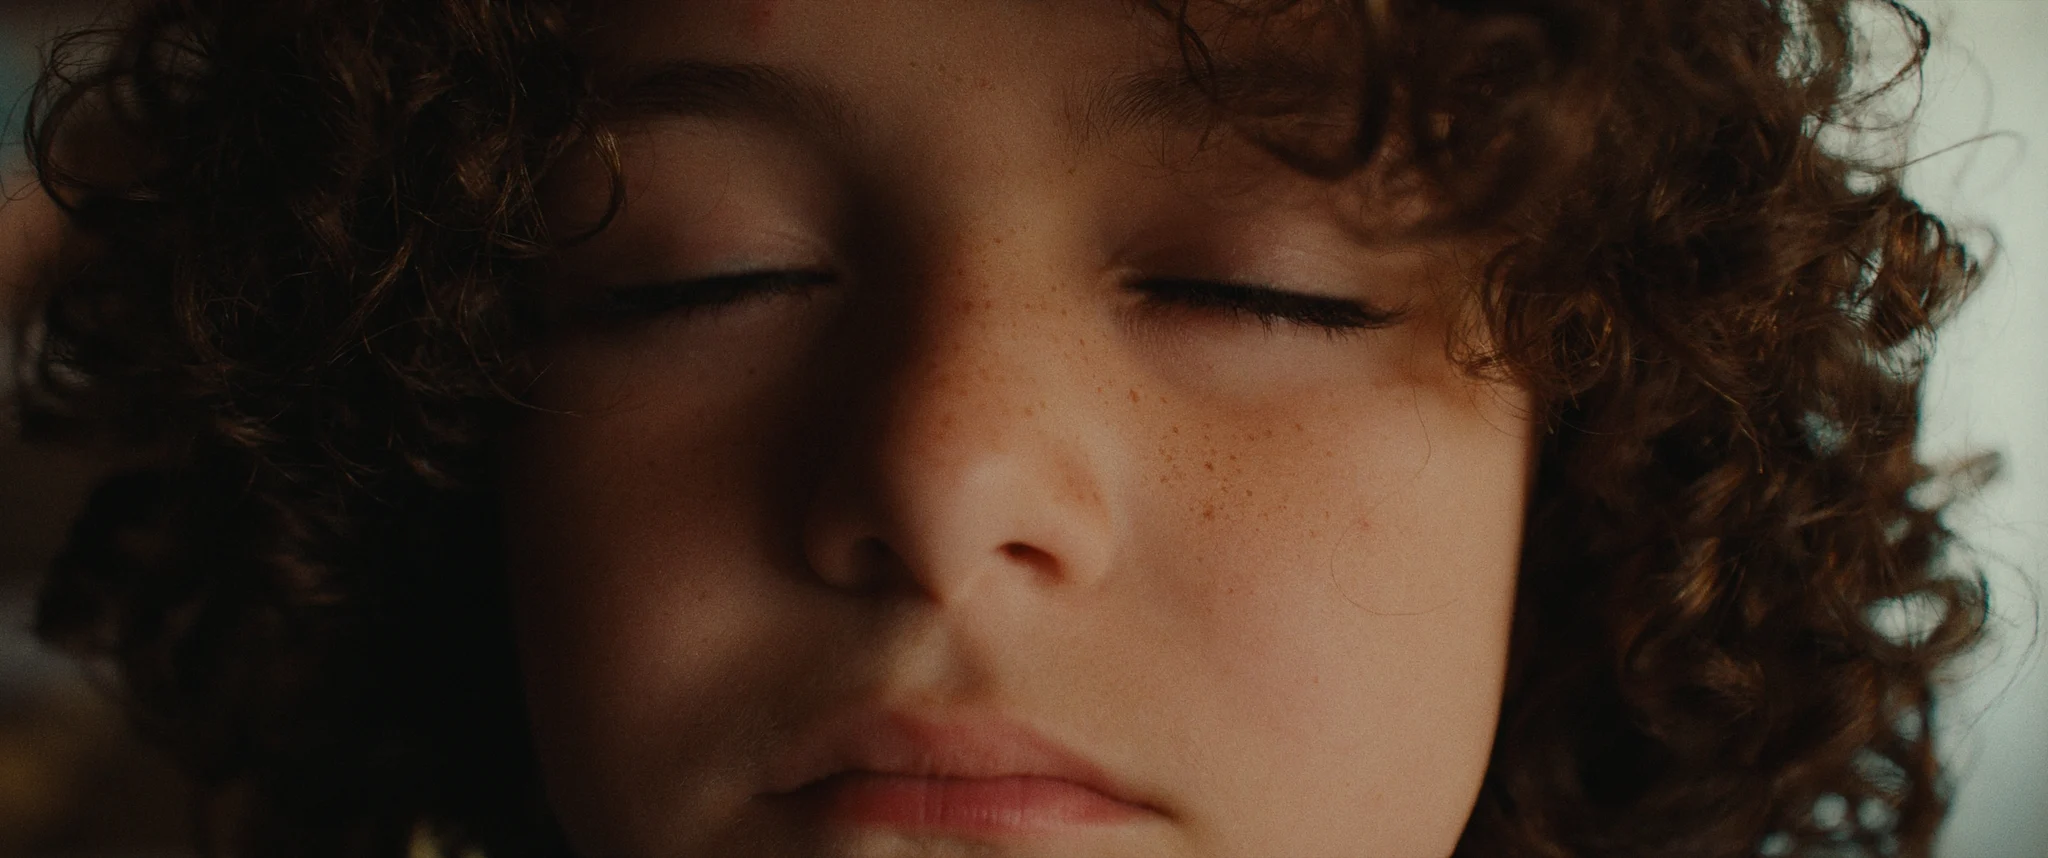 close up of a young boy closing his eyes